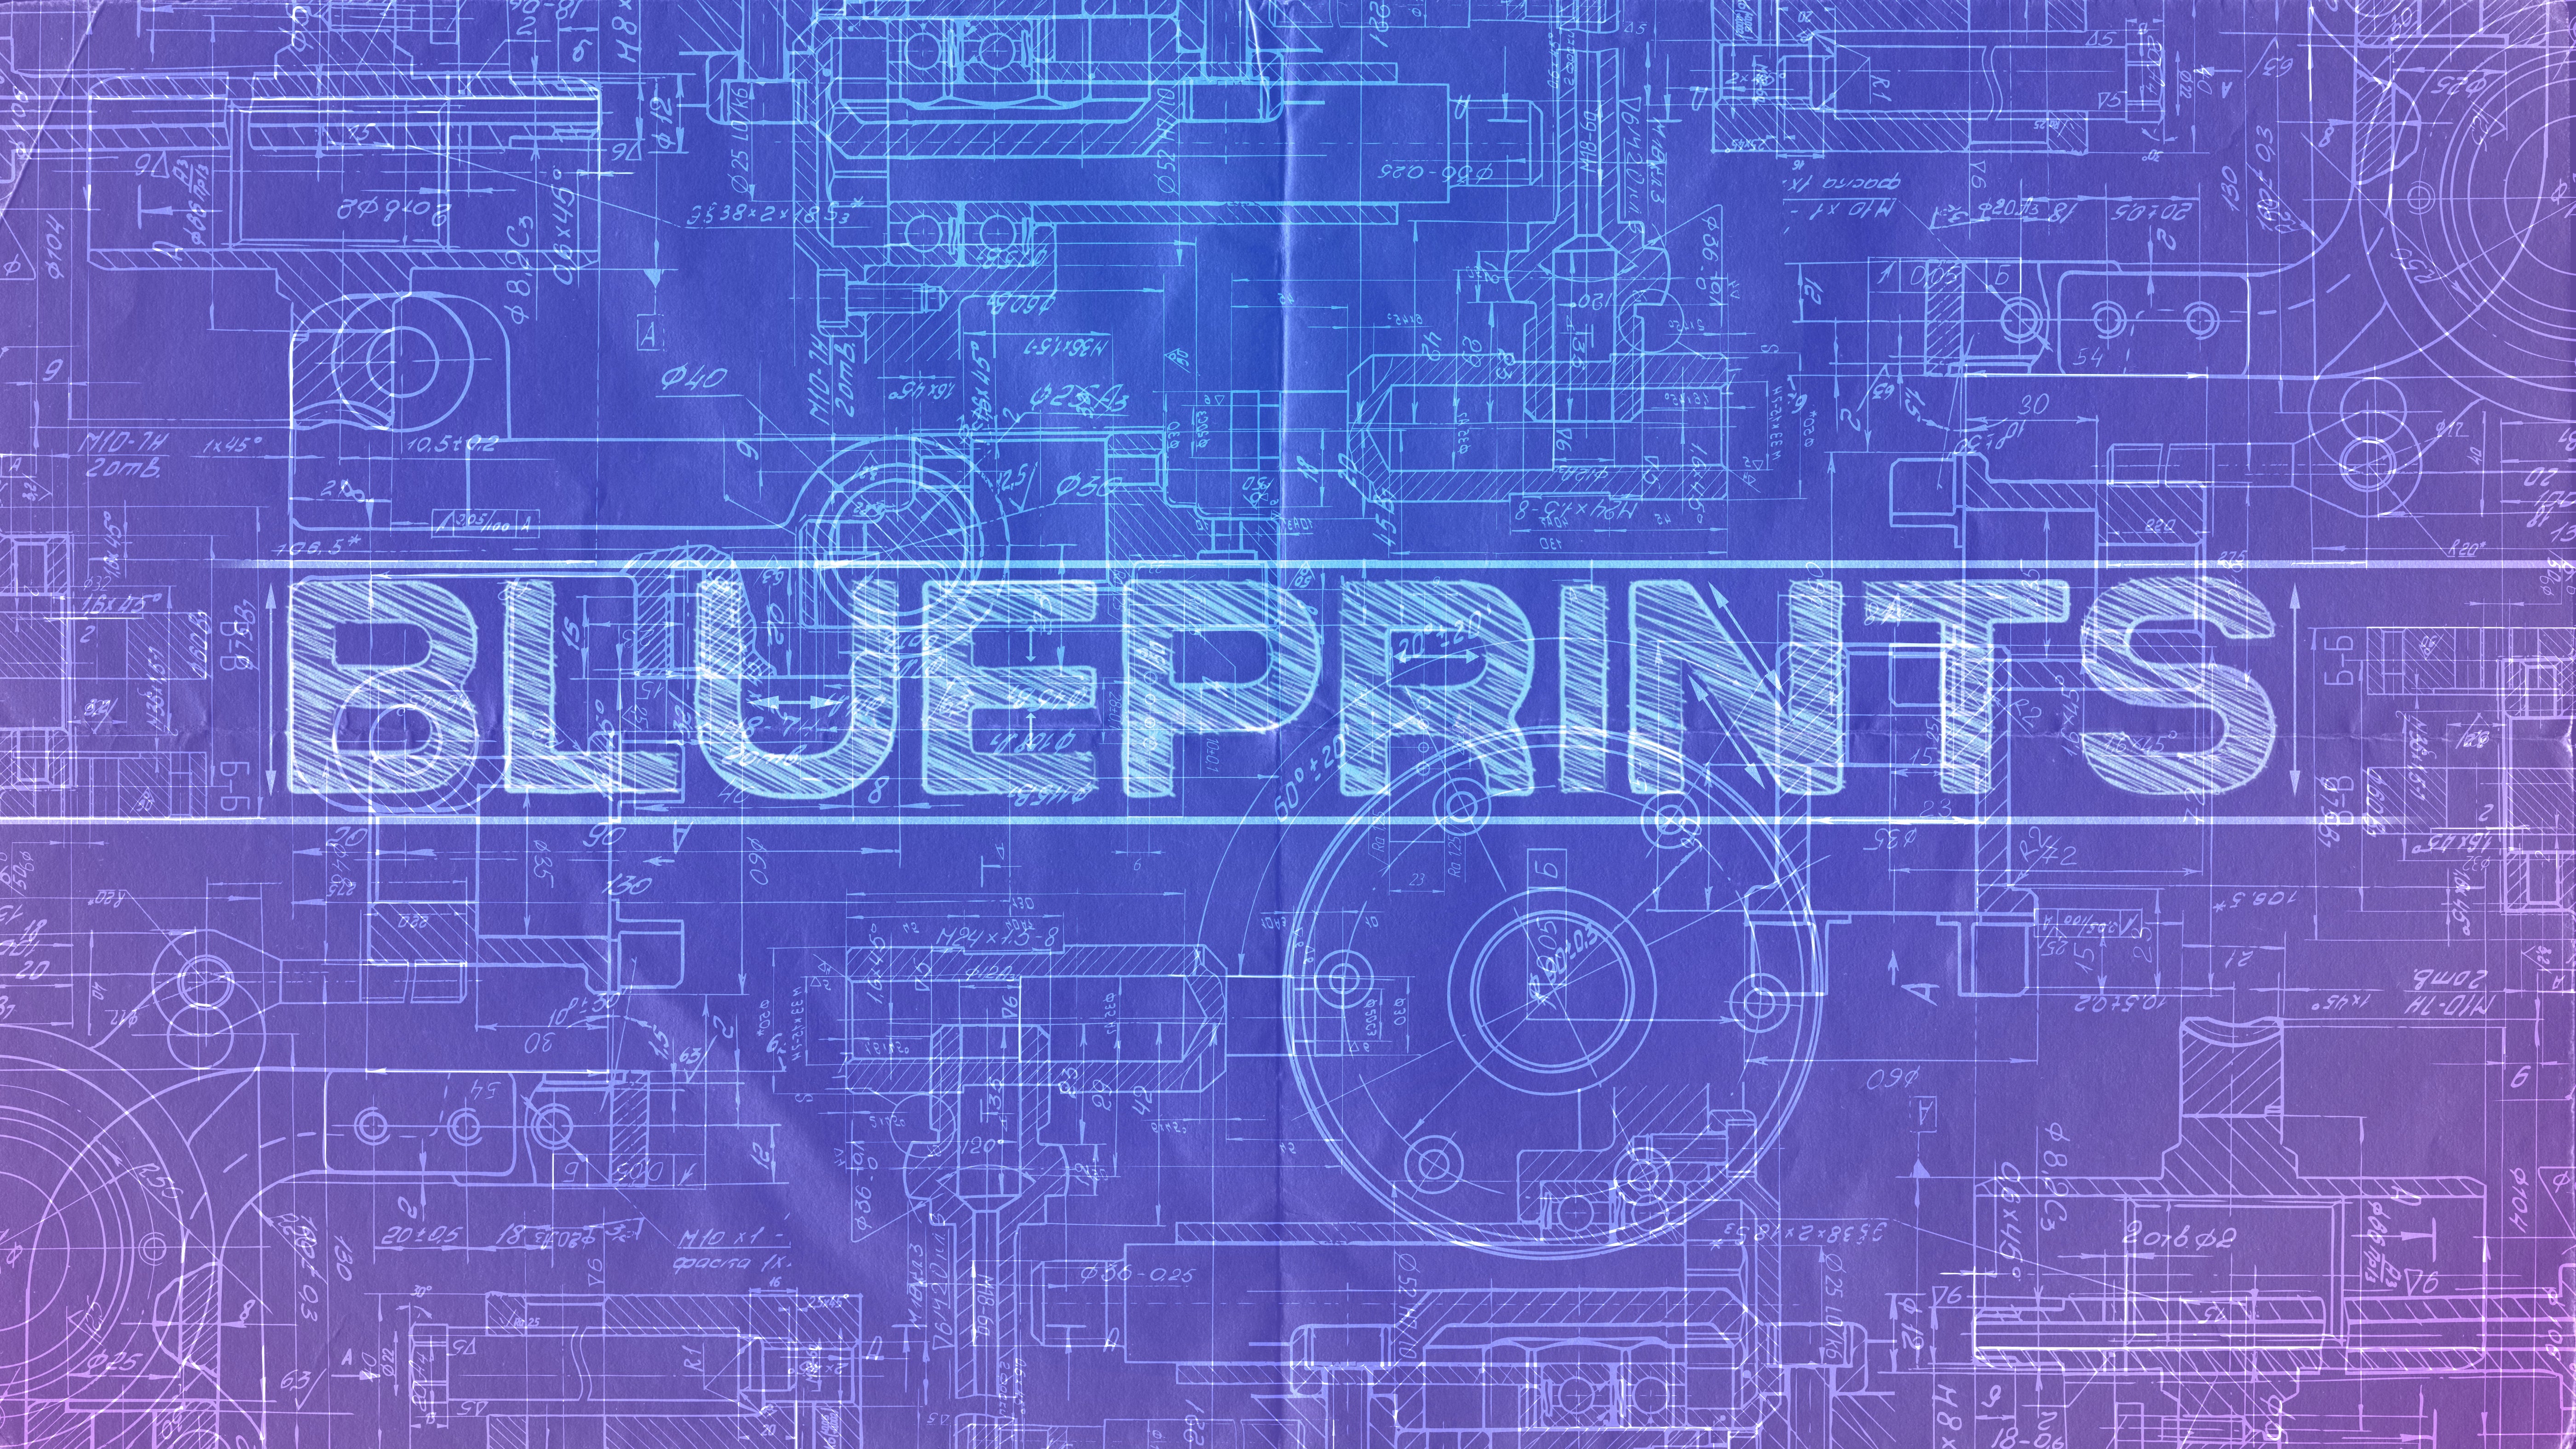 Blueprints Poster